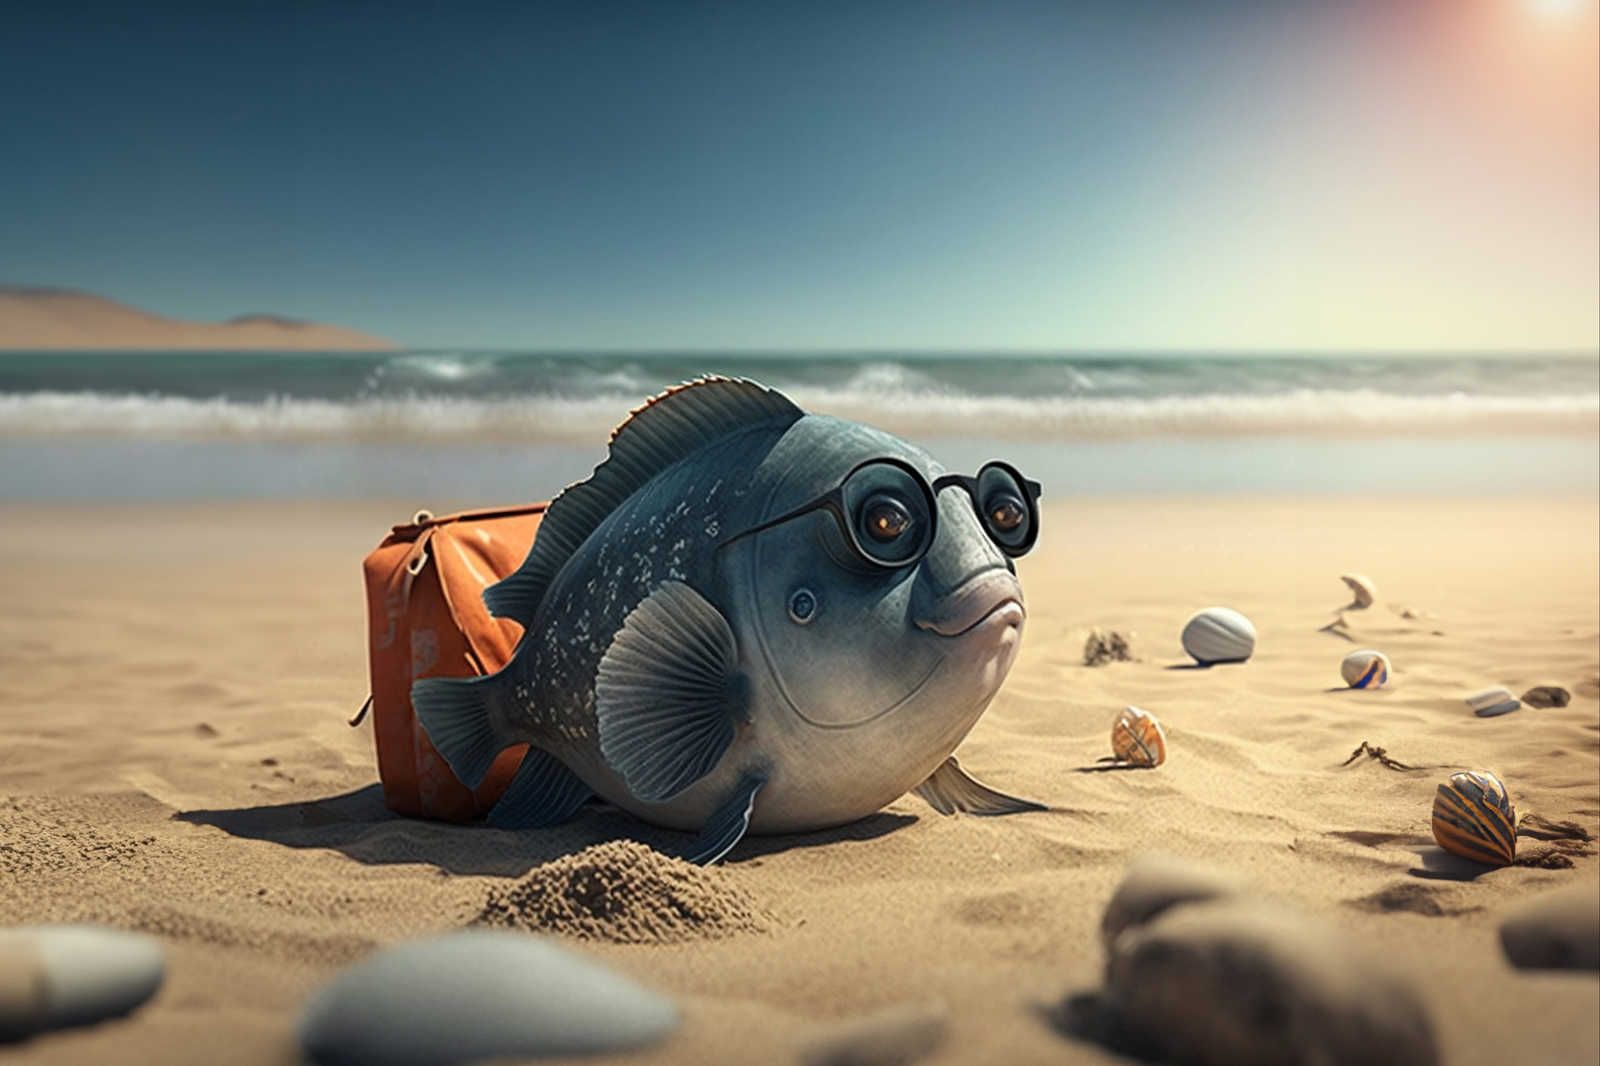             Toile KI »Fishy Beachday« - 90 cm x 60 cm
        